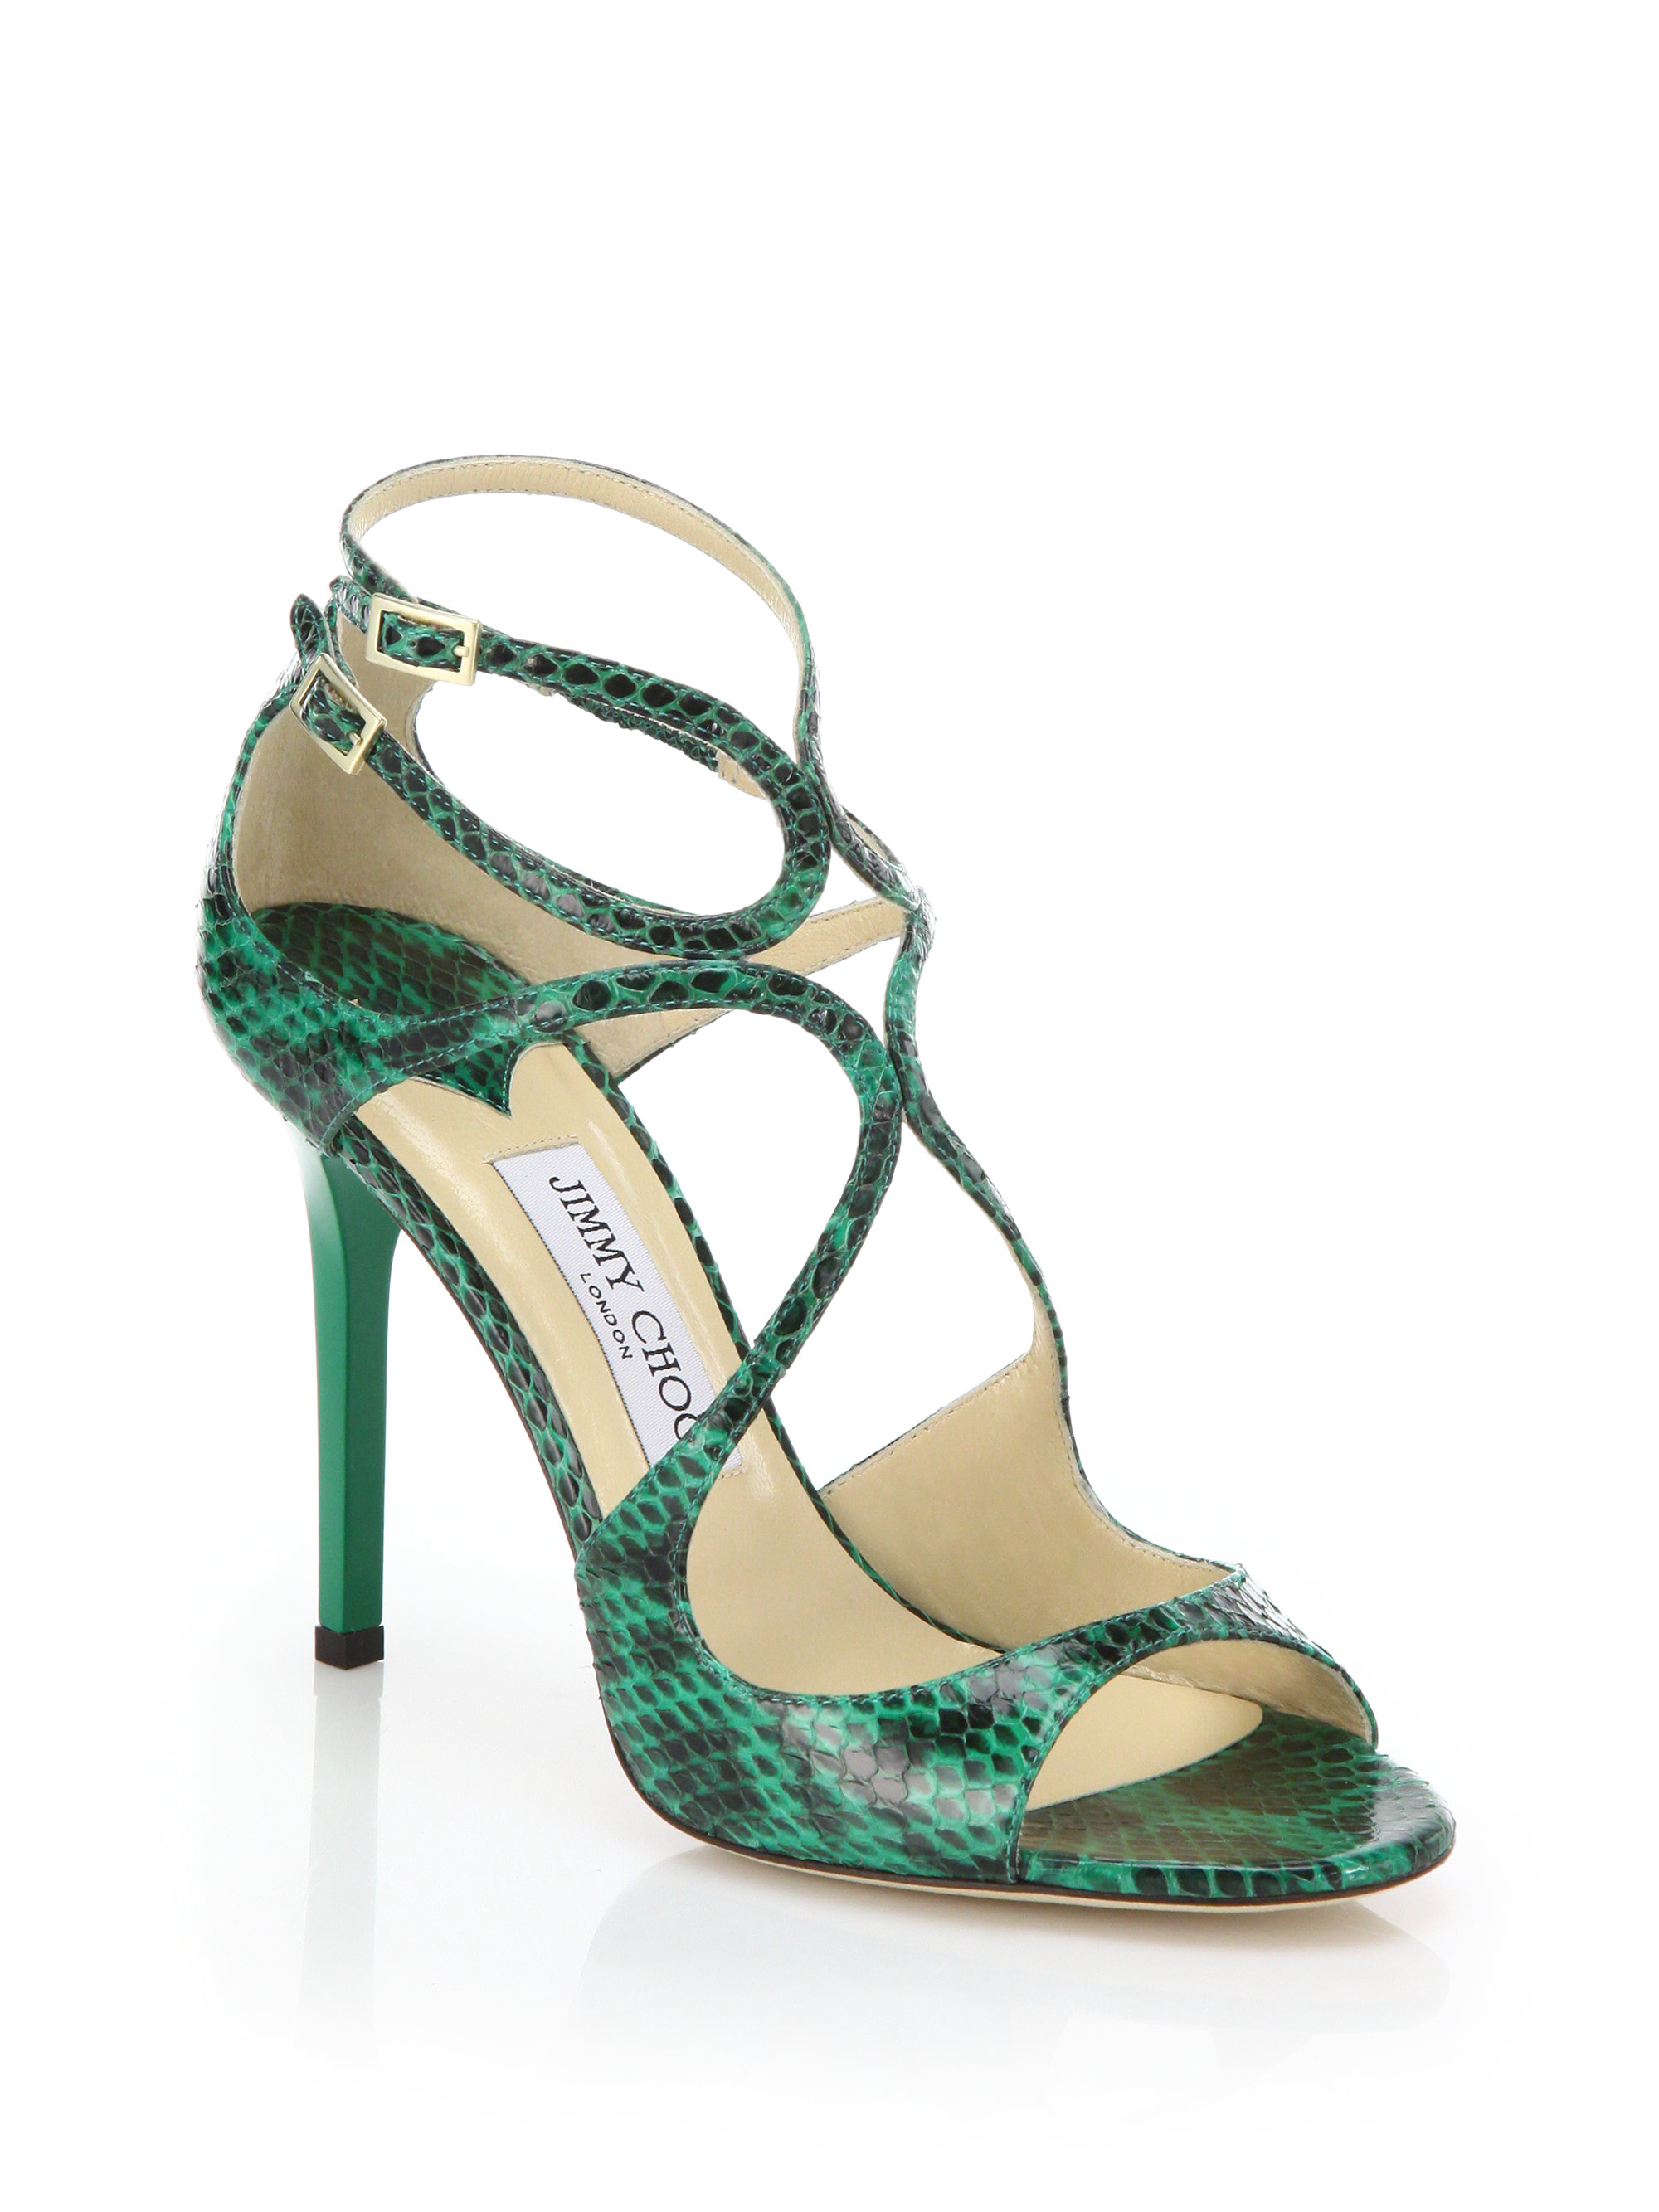 Jimmy Choo Lang Snakeskin Sandals in Green - Lyst